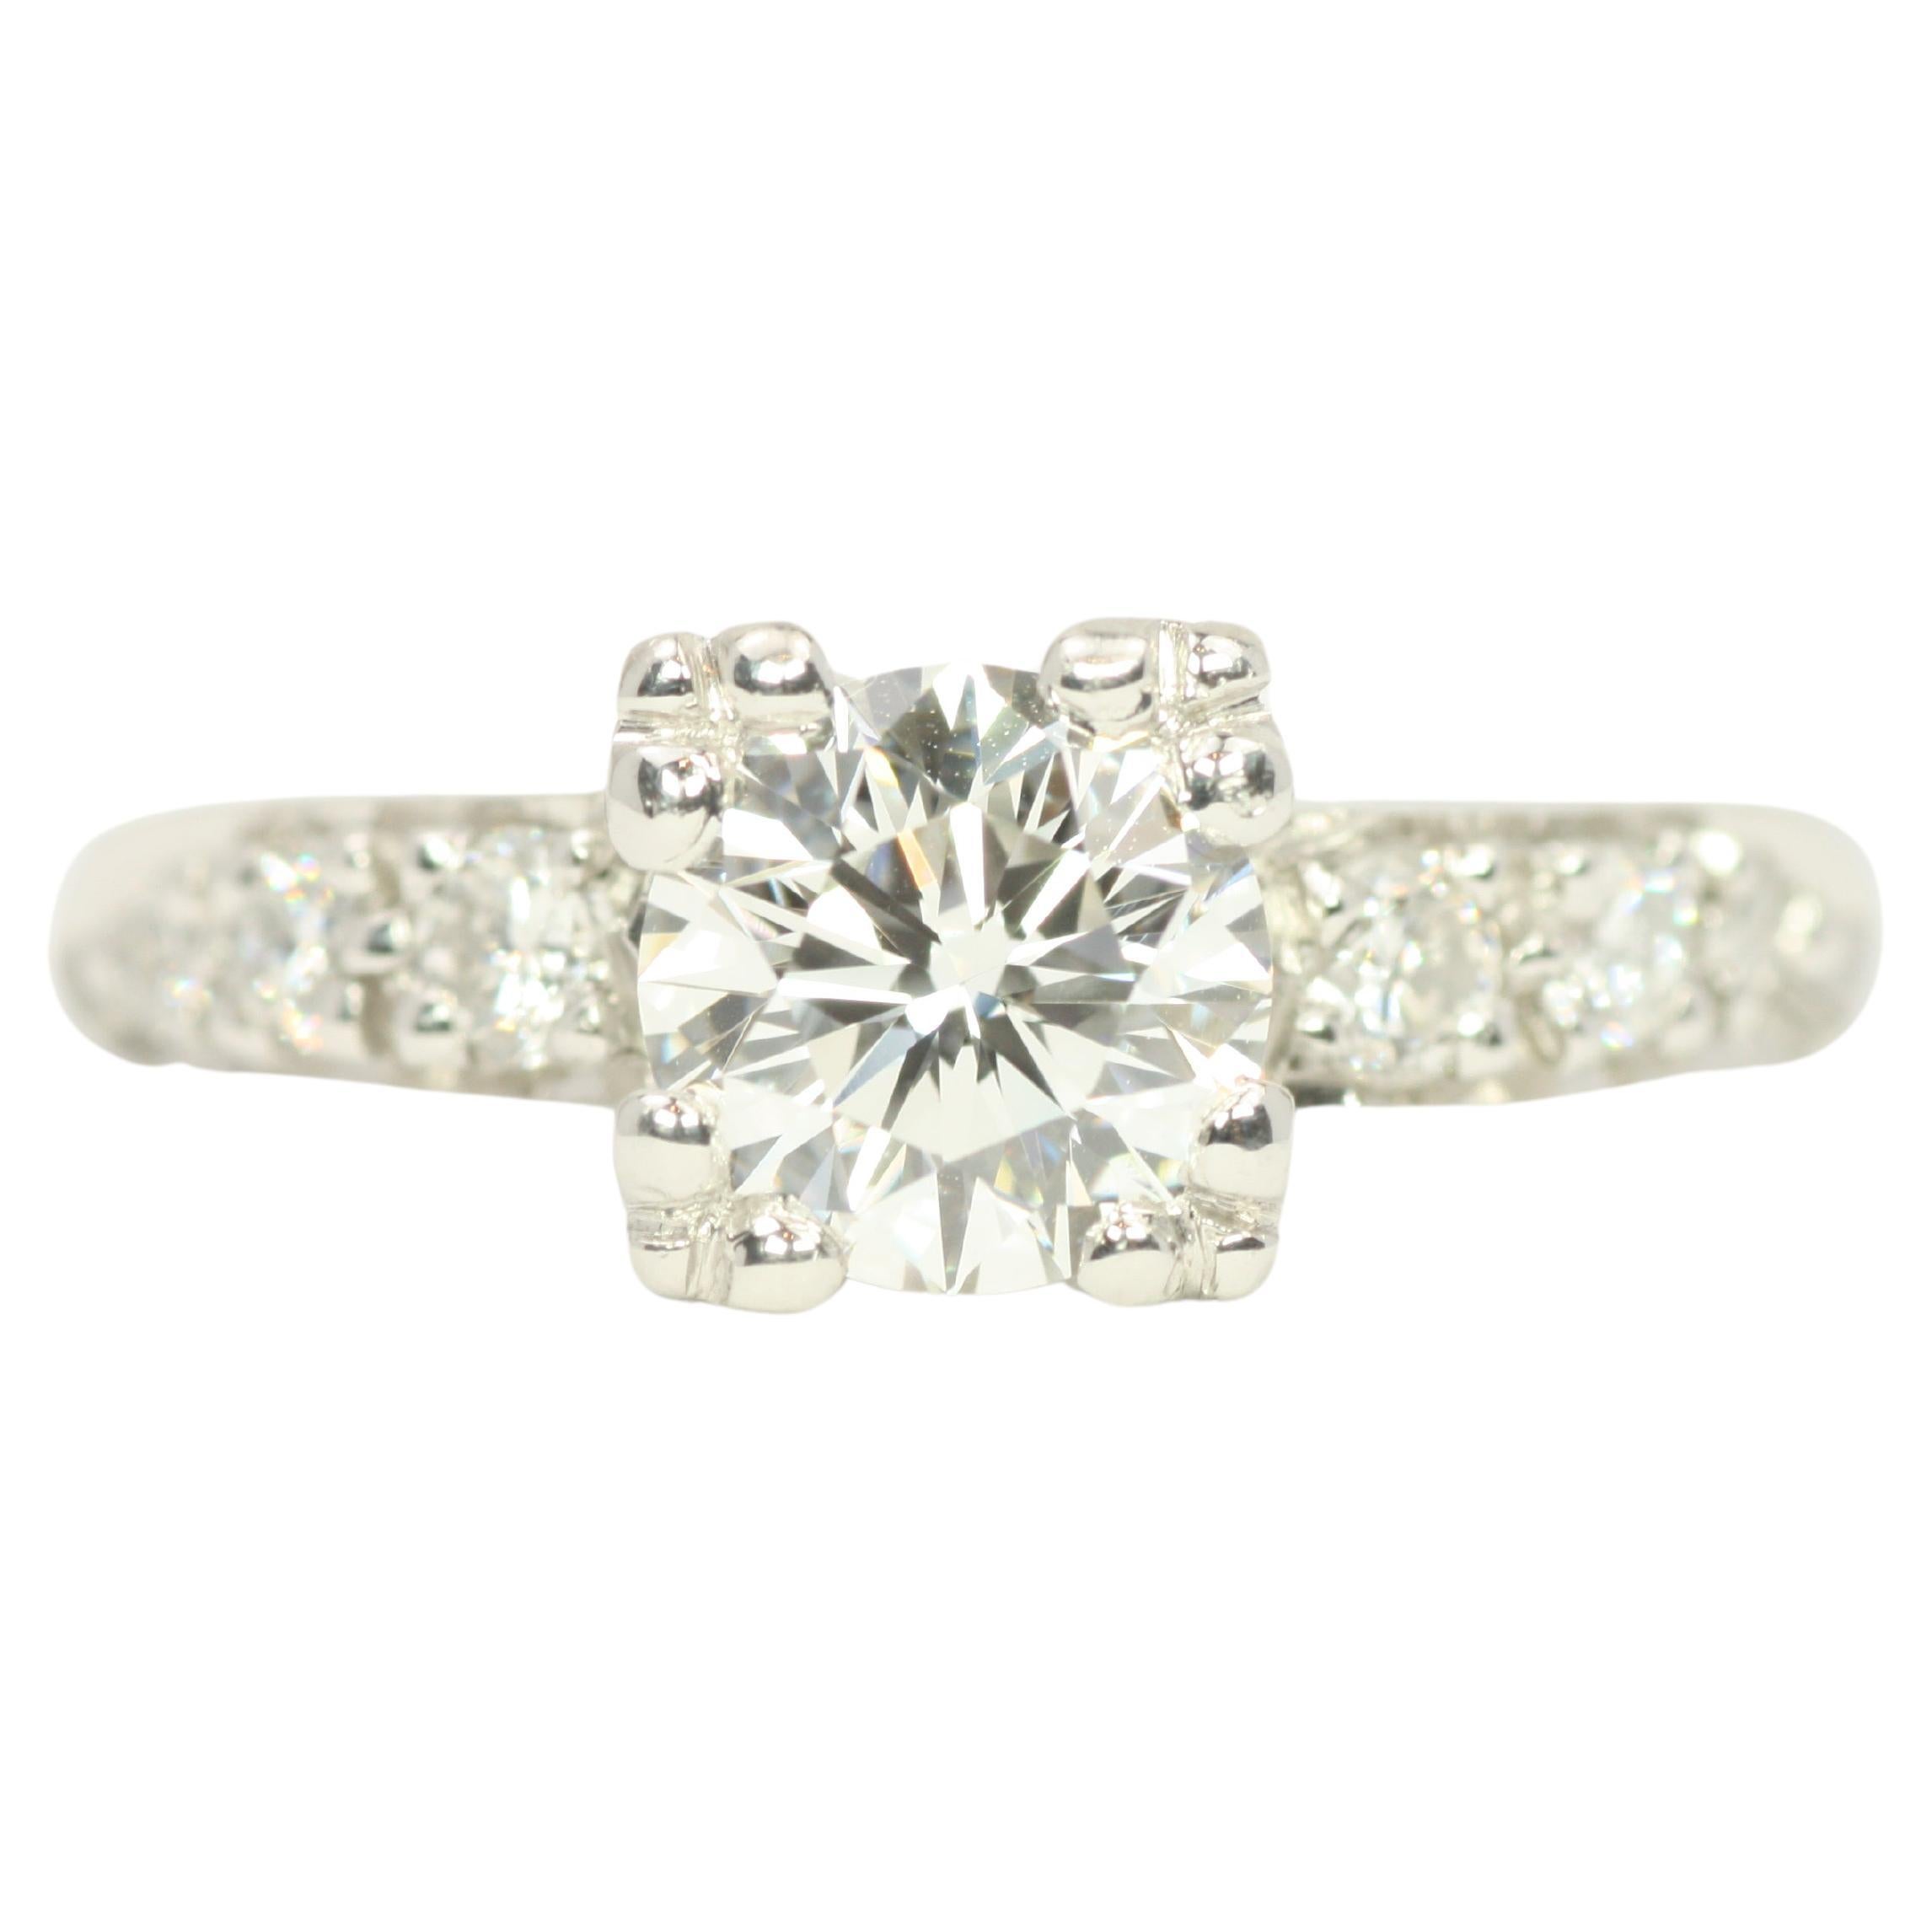 GIA Certified 1.02 Carat Round Diamond Platinum Engagement Ring by Bracken